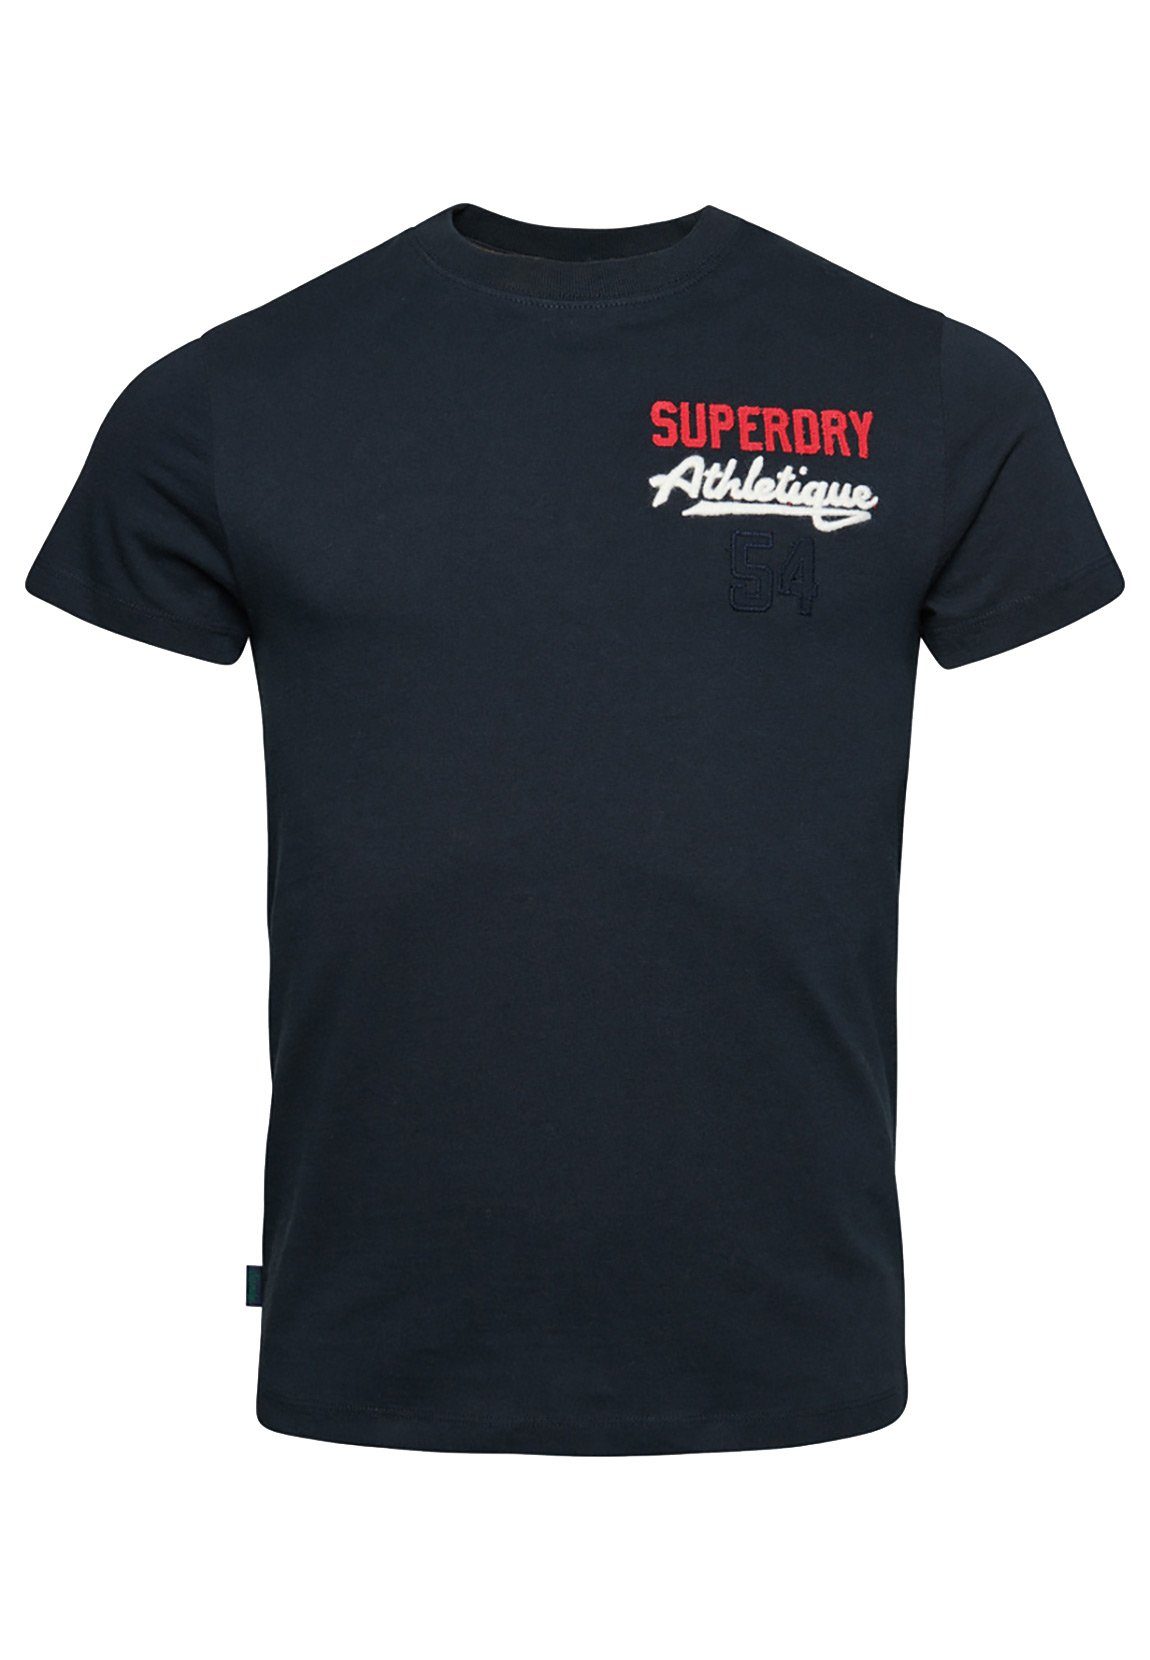 Superdry T-Shirt SUPERSTATE Navy TEE ATH LOGO Eclipse EMB Superdry Herren T-Shirt